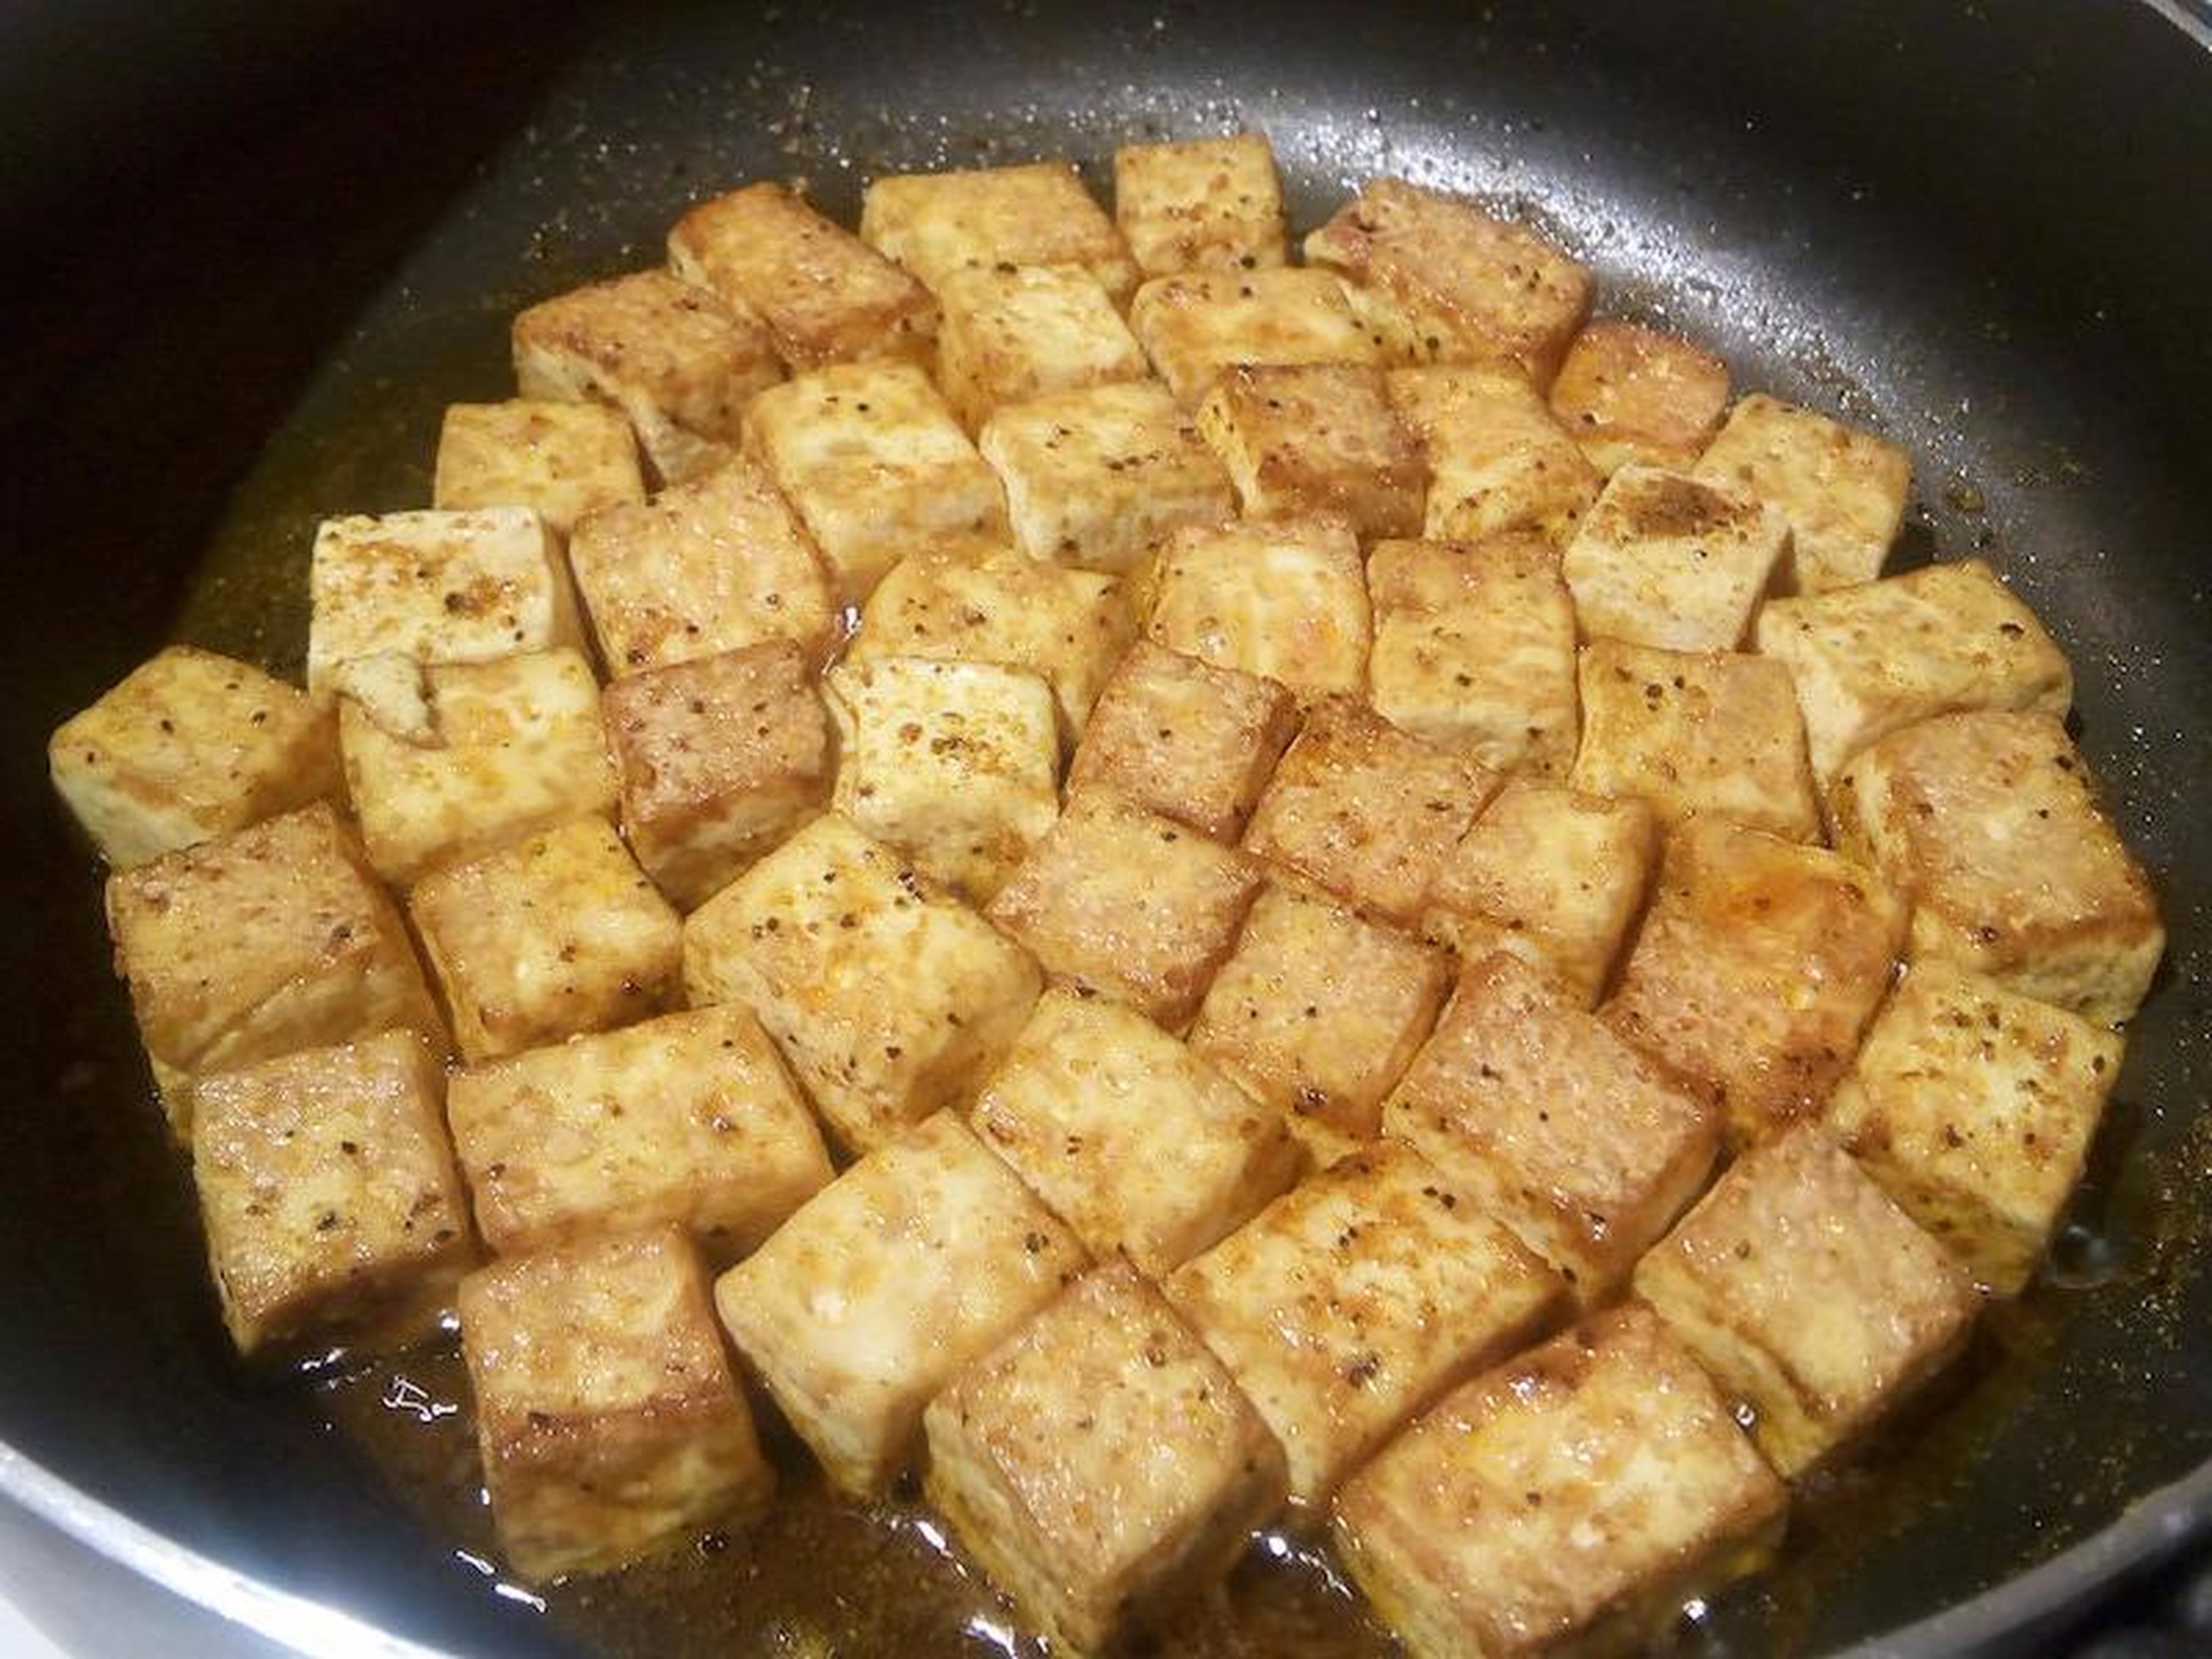 Tofu is a versatile food.